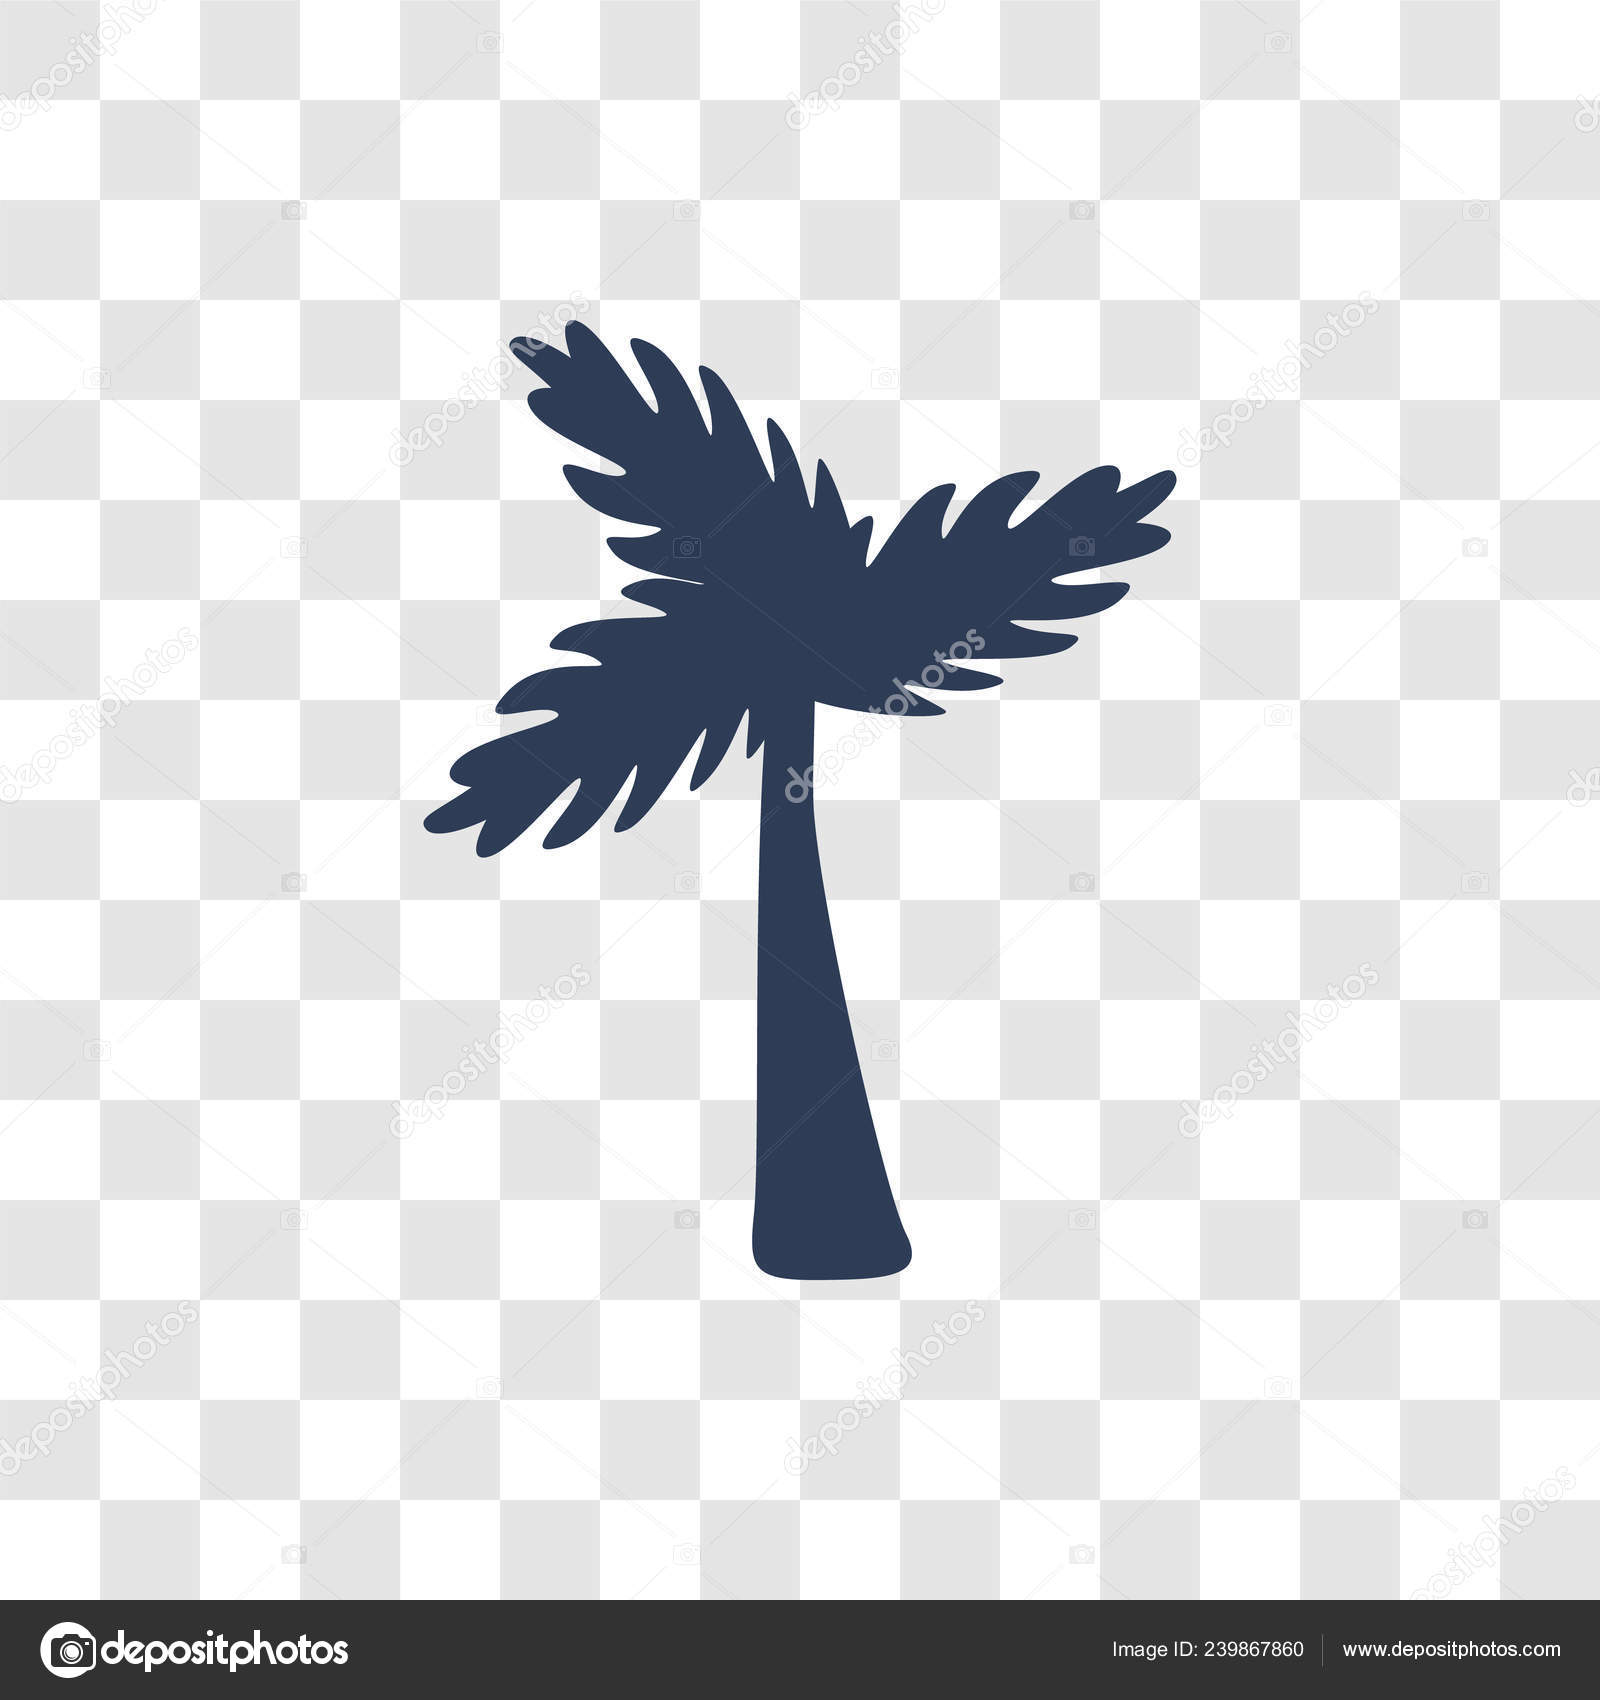 https://st4.depositphotos.com/18664664/23986/v/1600/depositphotos_239867860-stock-illustration-coconuts-palm-tree-brazil-icon.jpg